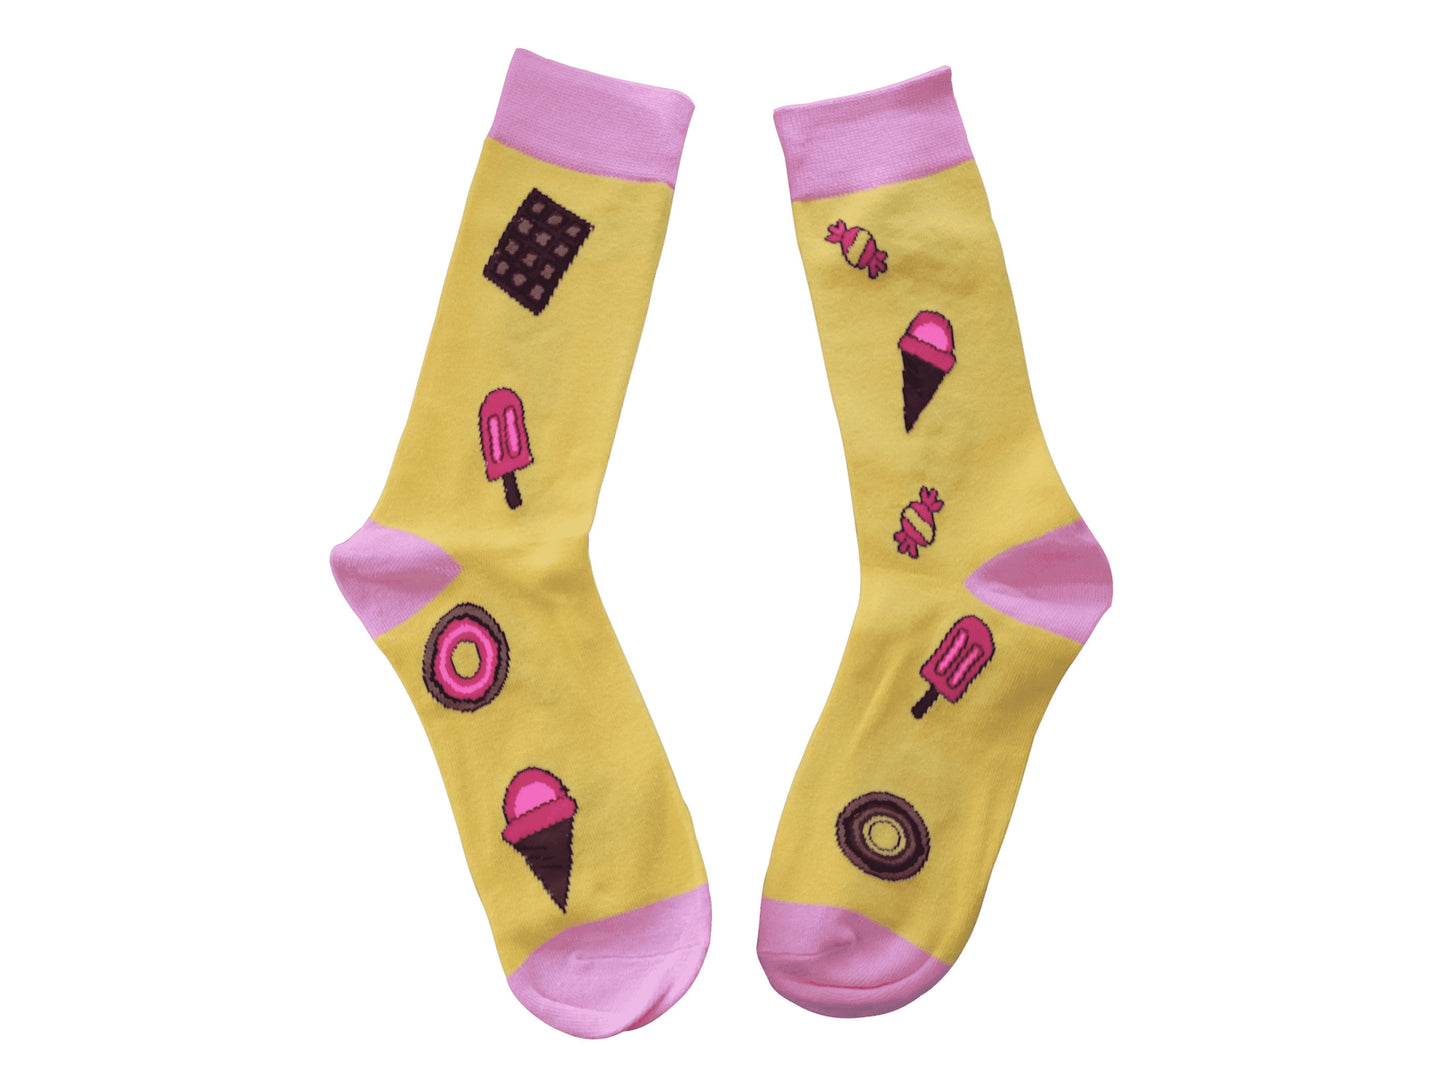 Sweets Socks Sockable Fundraising 